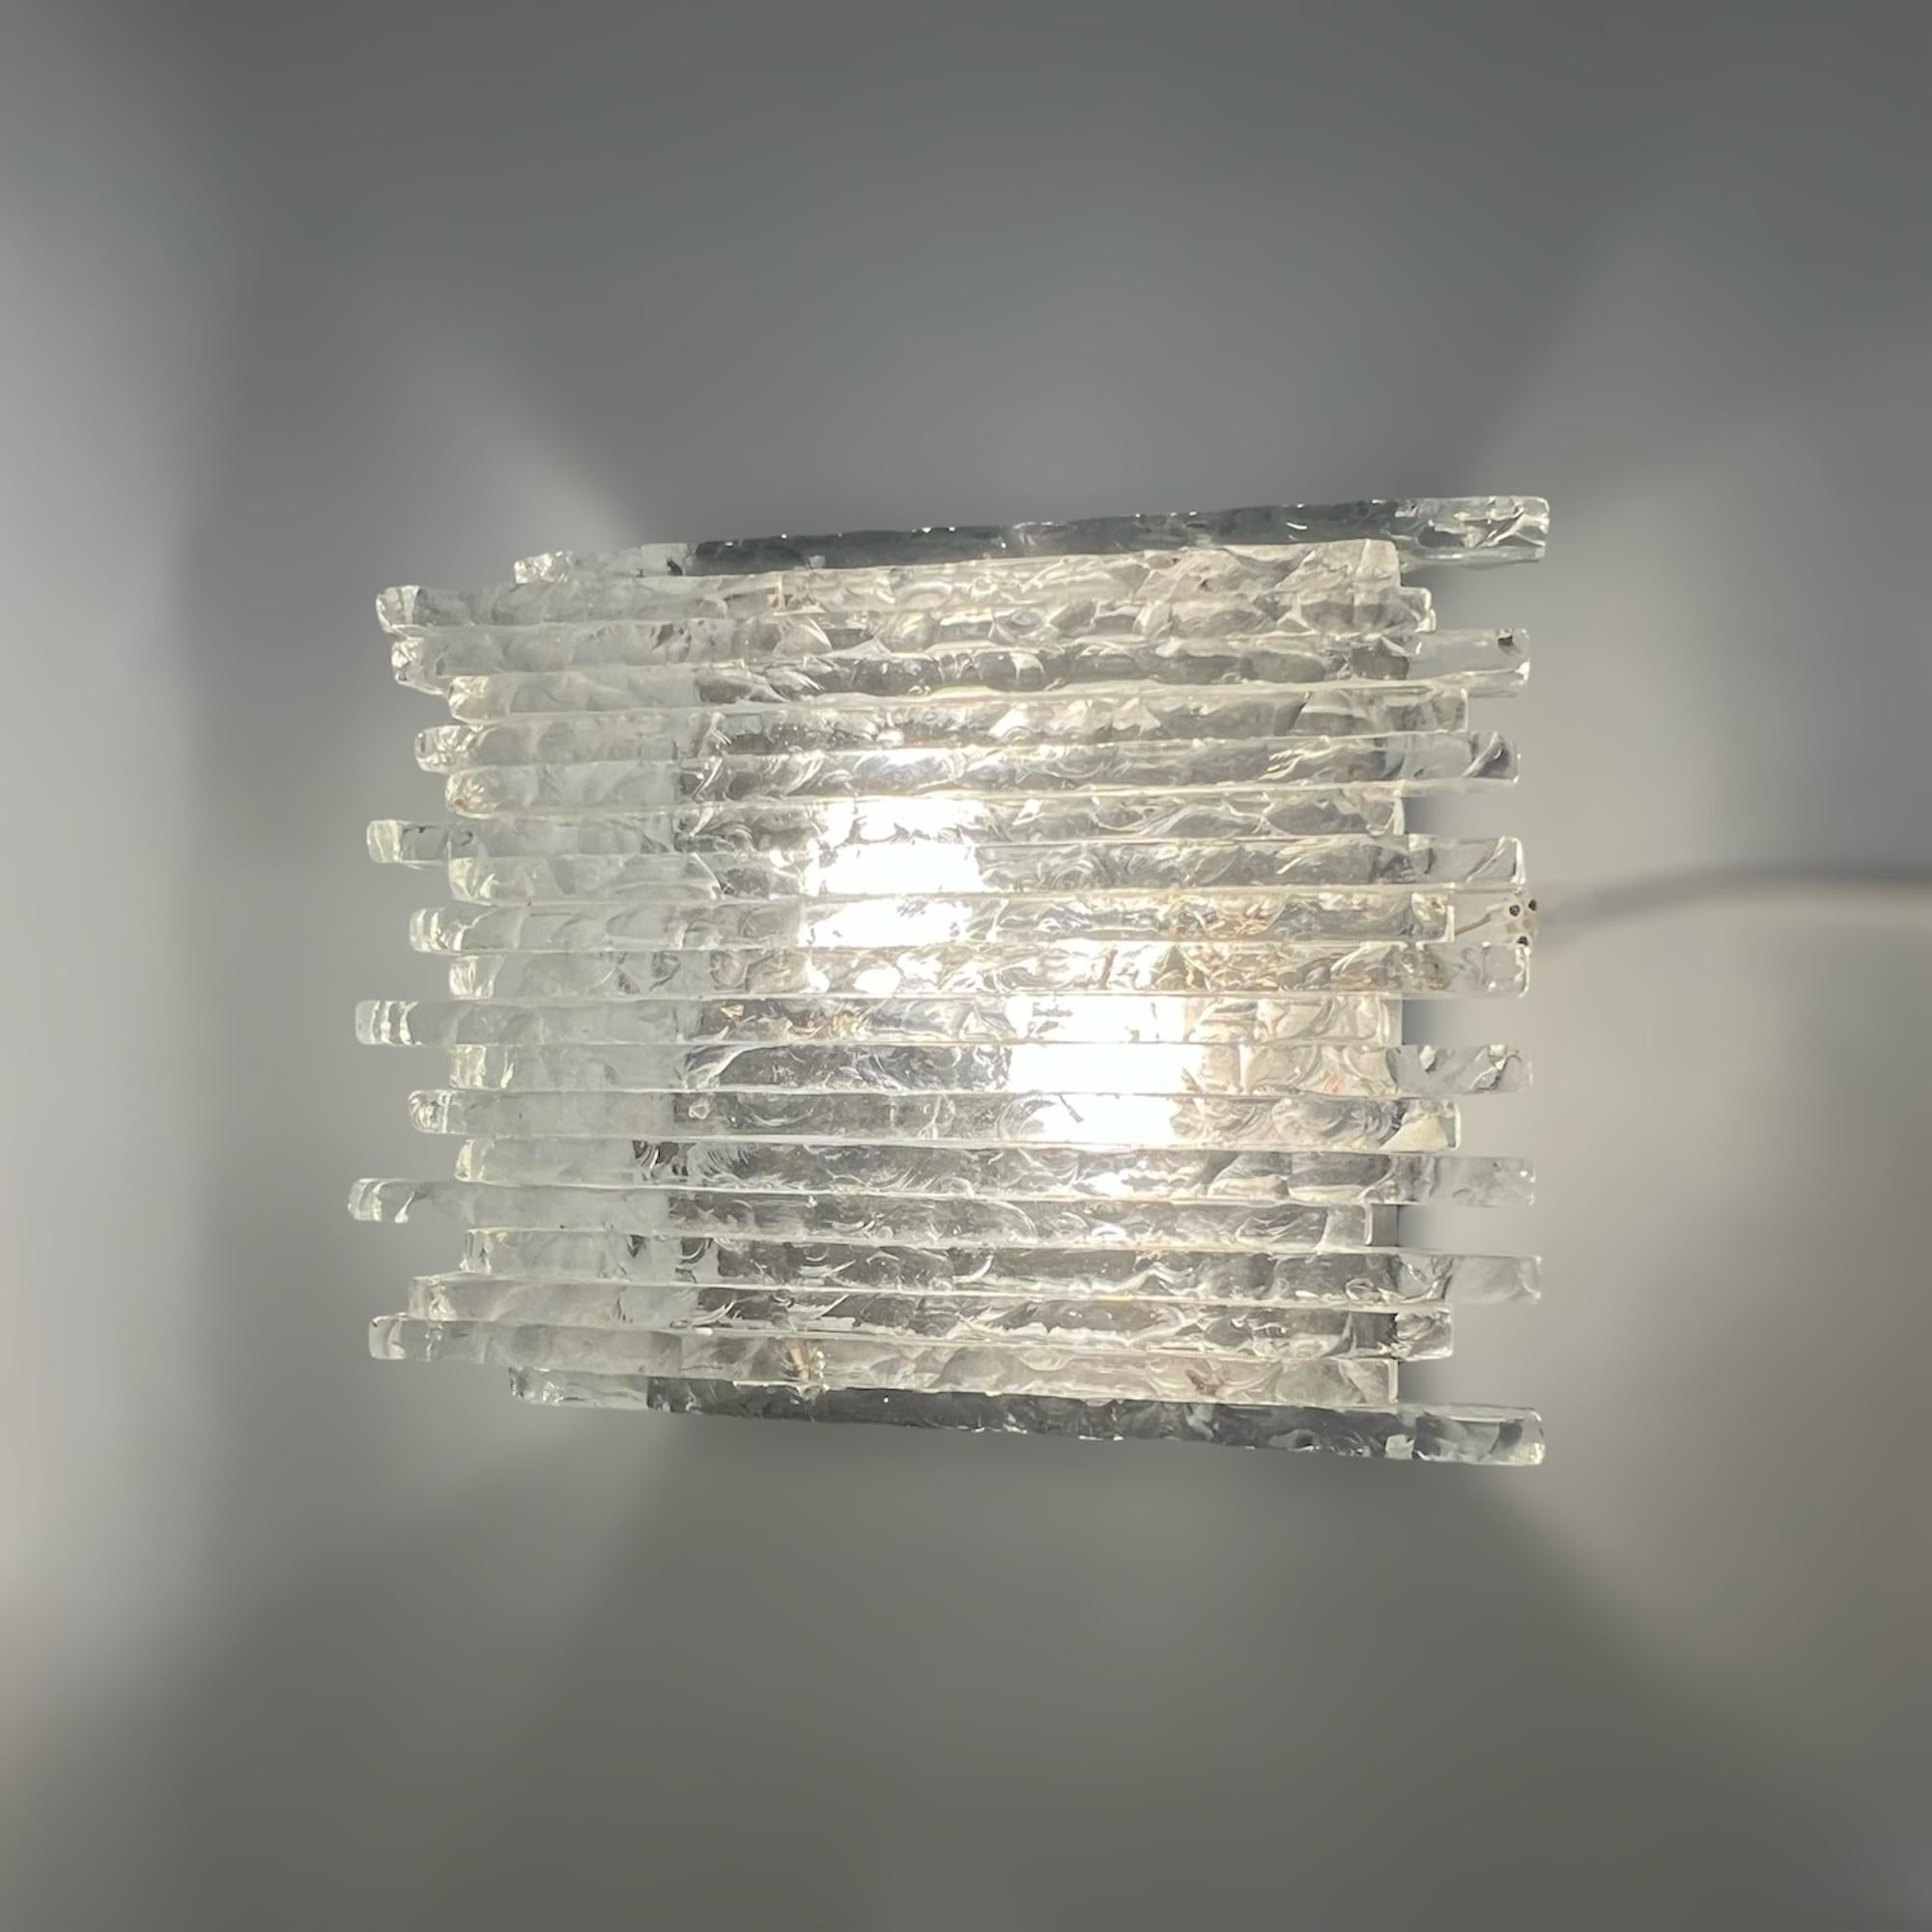 Italian Poliarte 'Vesta' Iconic Handmade Glass Lamps - Brutalist 1970s Style For Sale